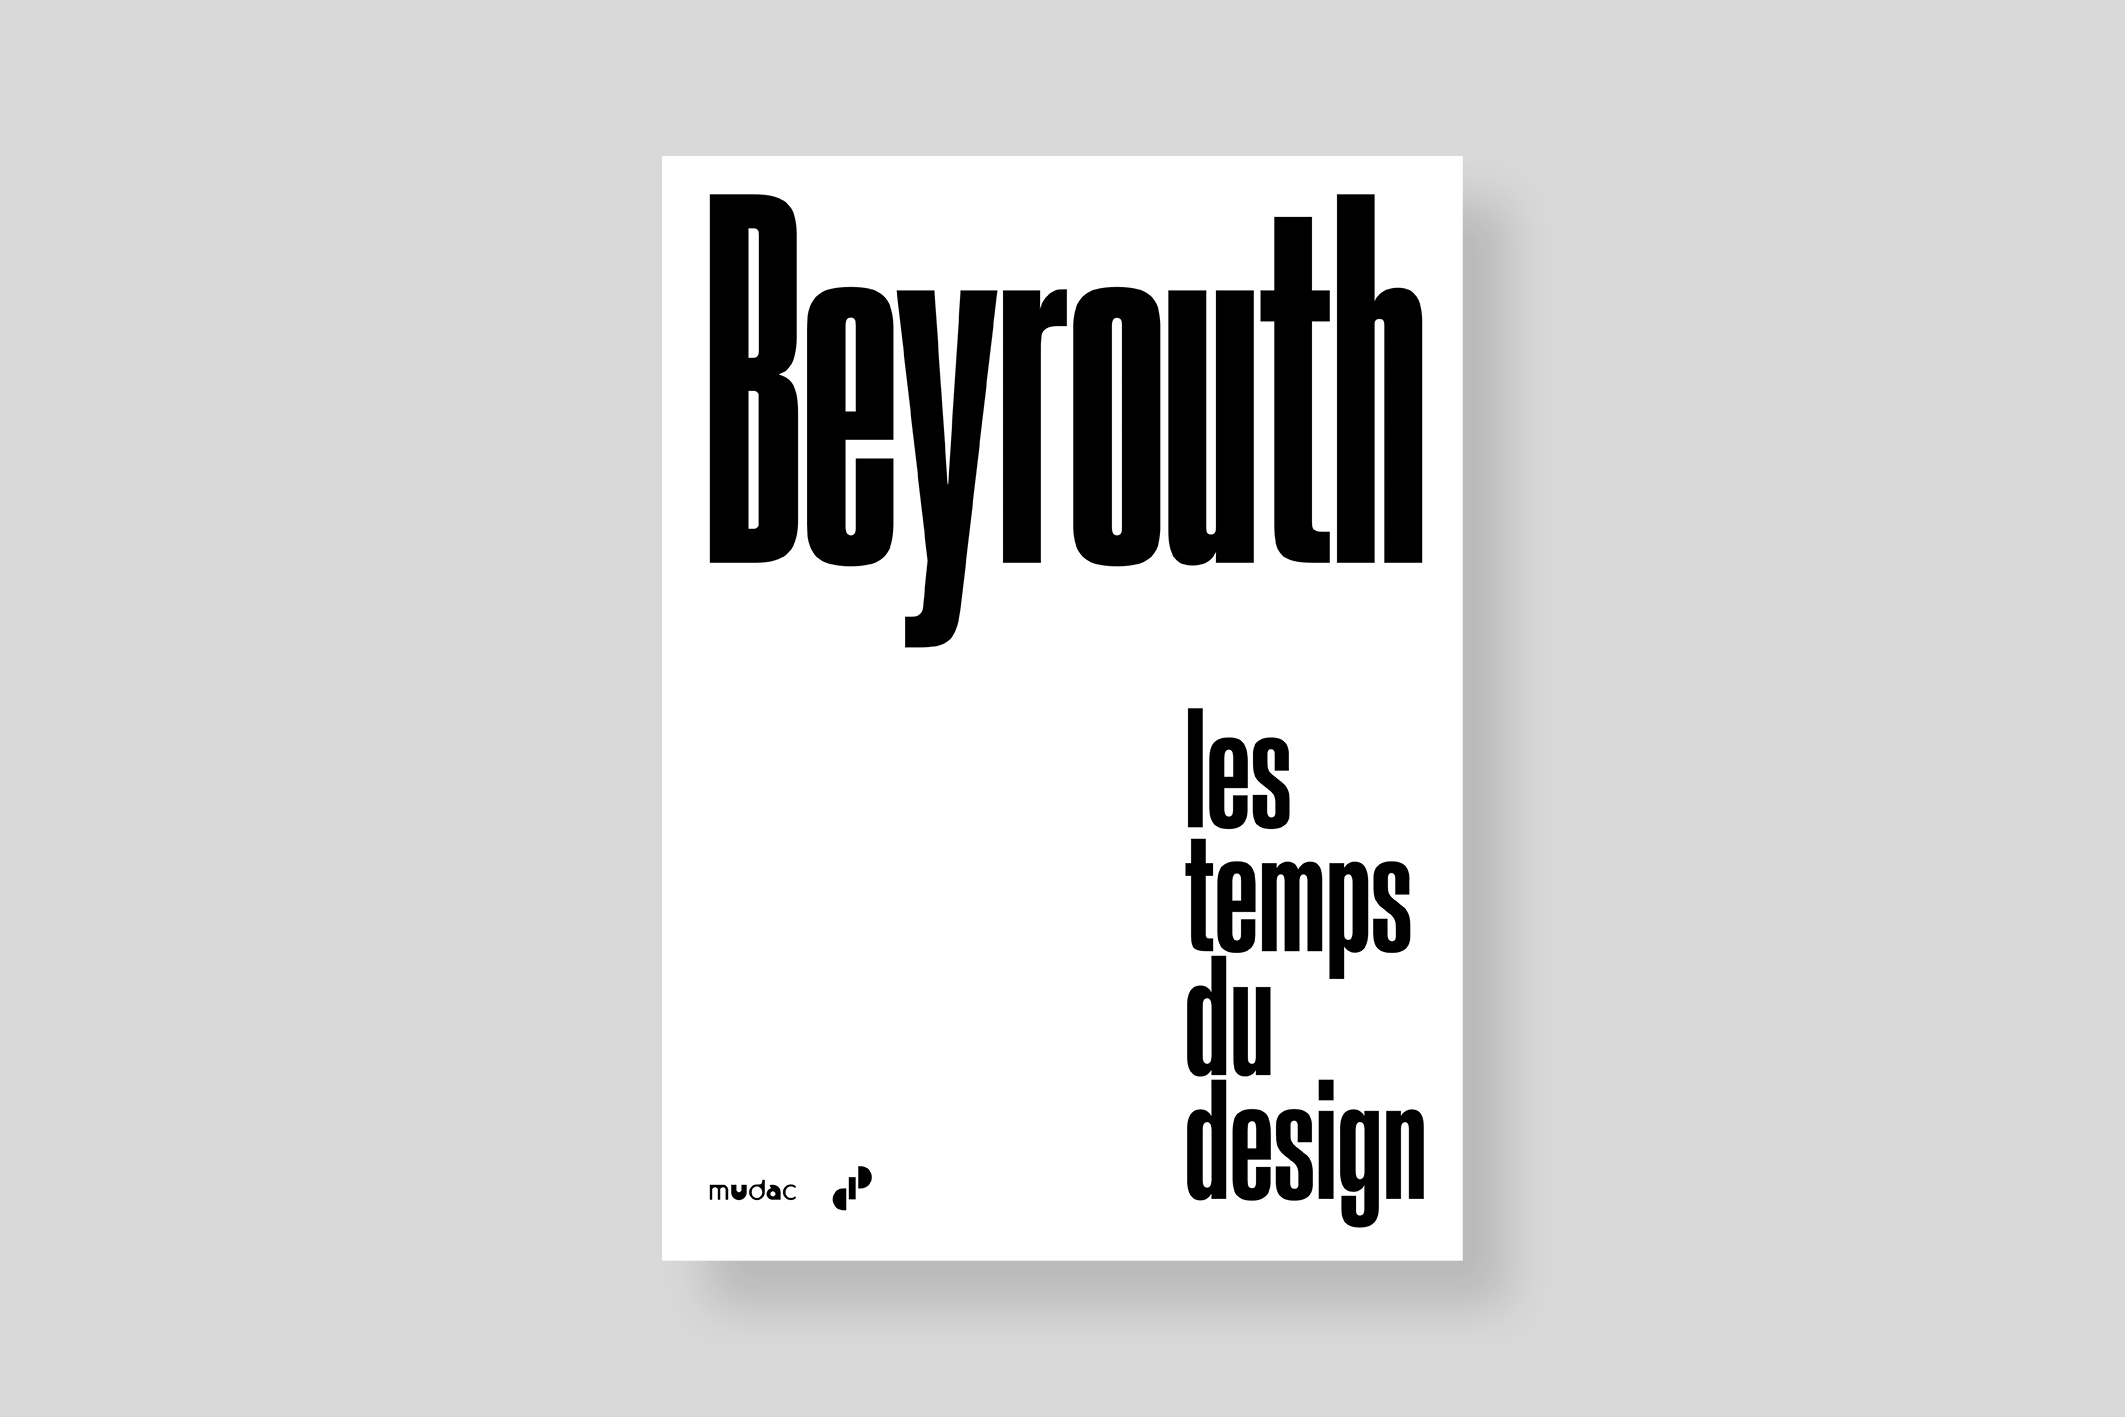 beyrouth-les-temps-du-design-kaph-books-mudac-cover